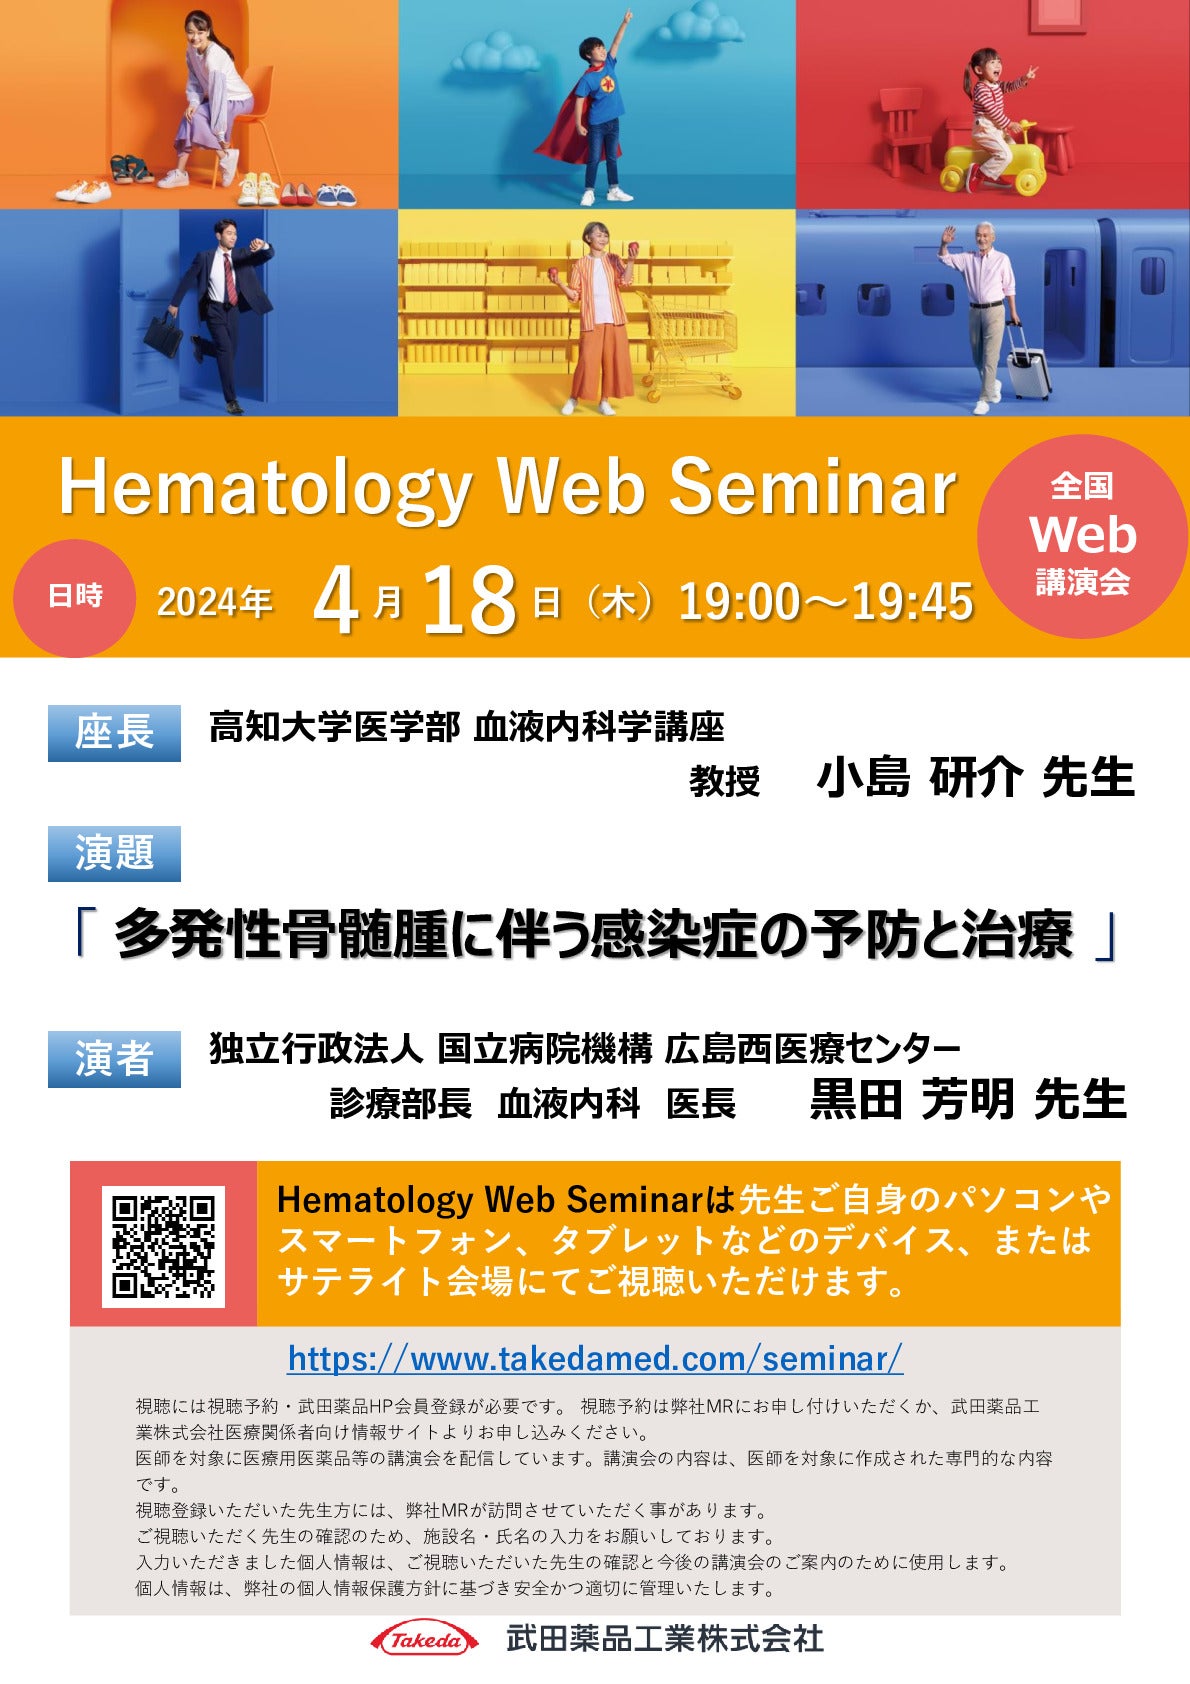 Hematology Web Seminar